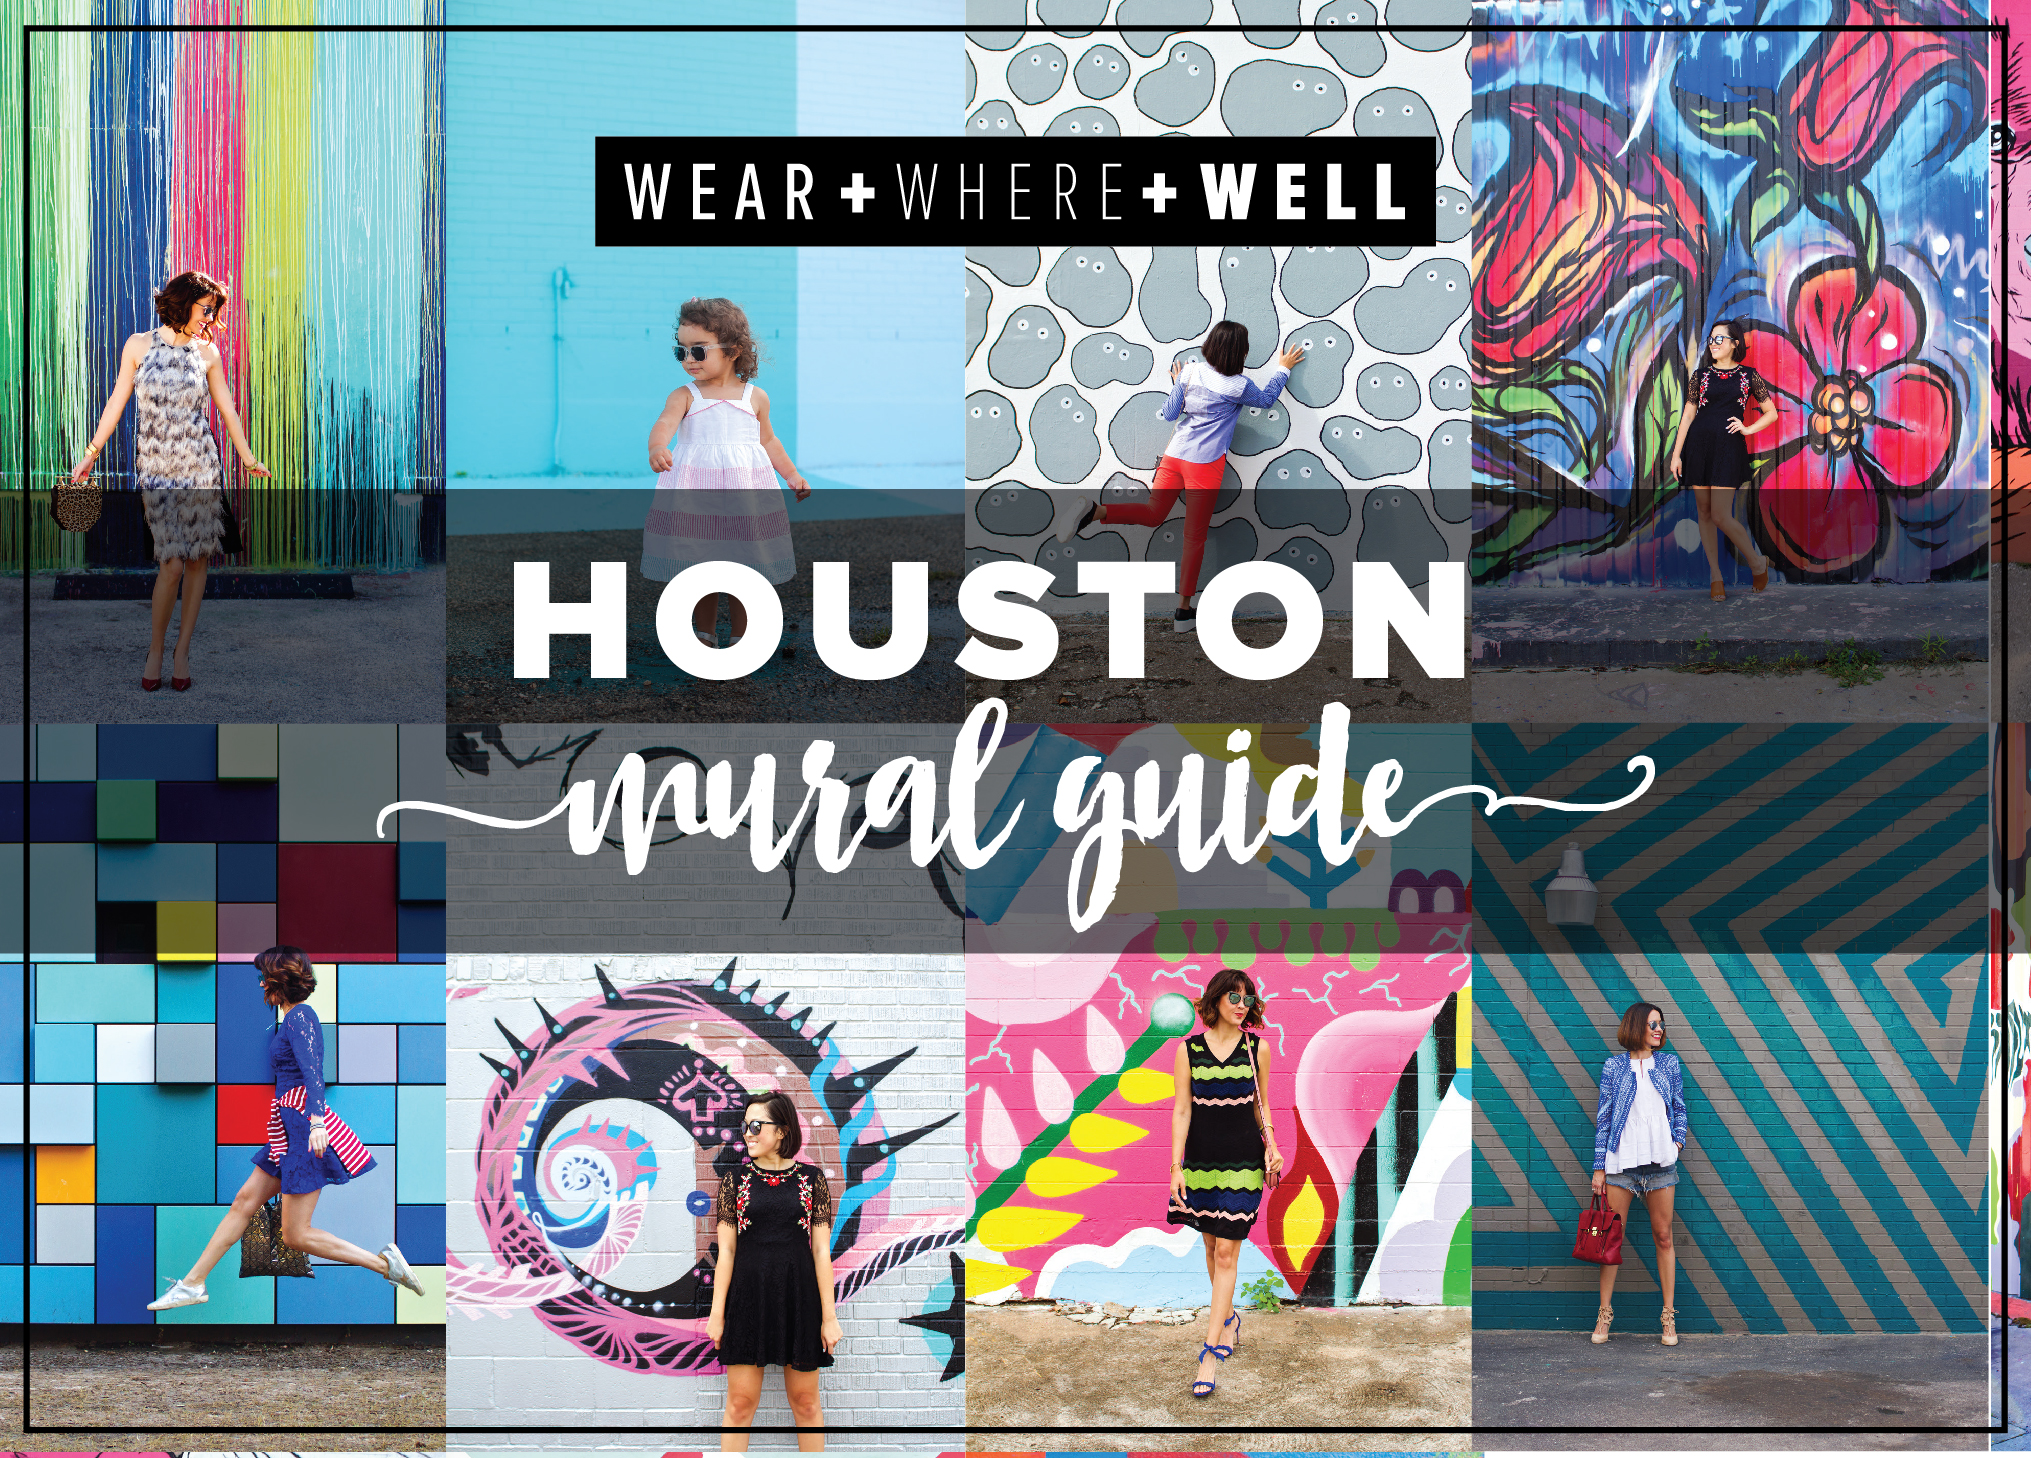 Houston Mural Guide - Wear + Where + Well